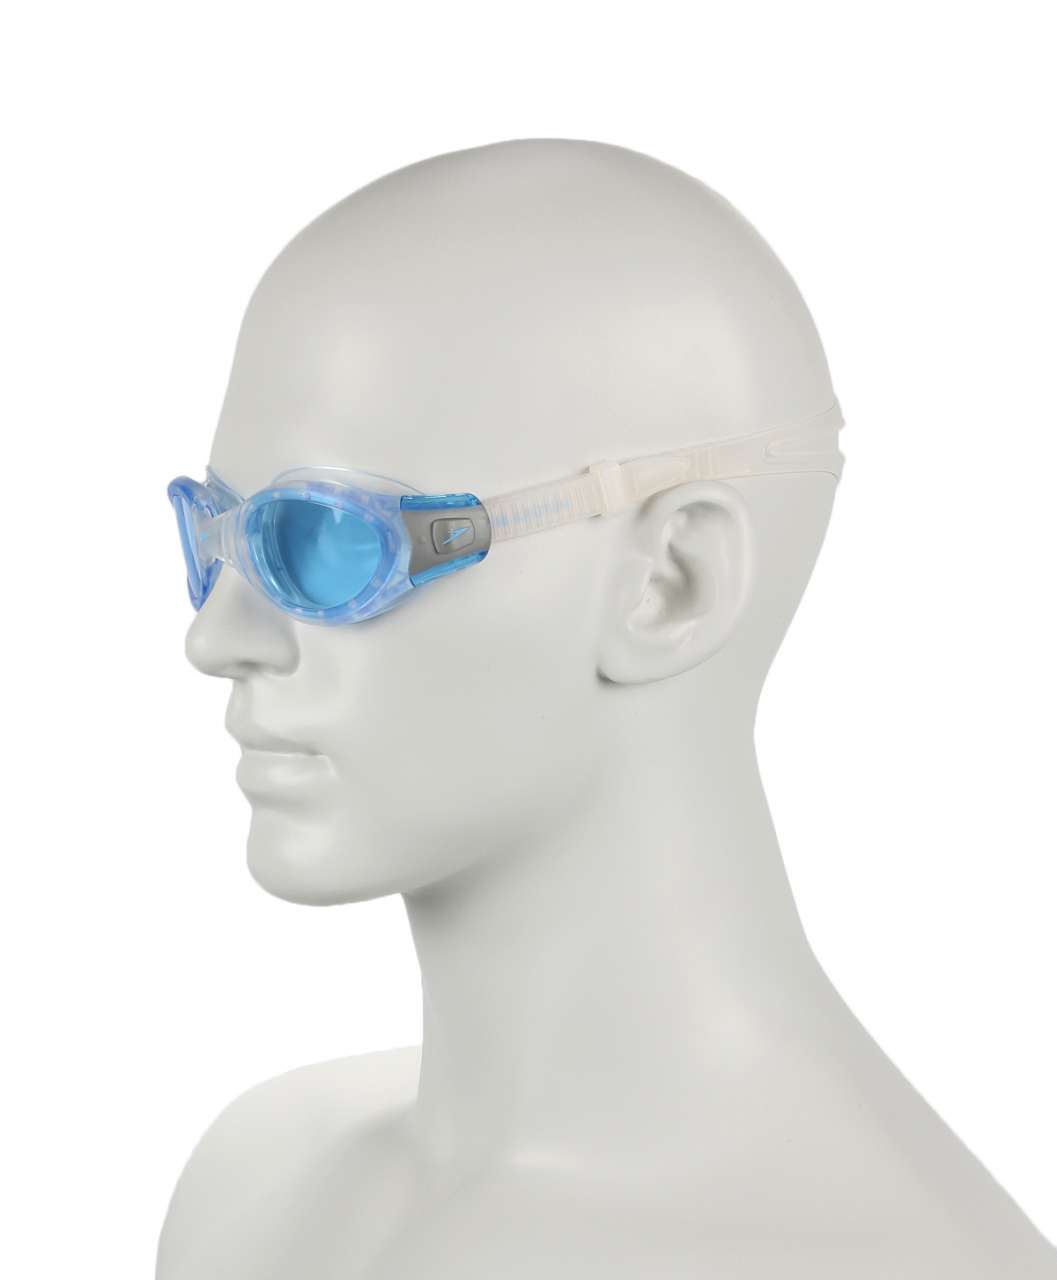 Speedo Futura Biofuse Clear Zwembril Blauw